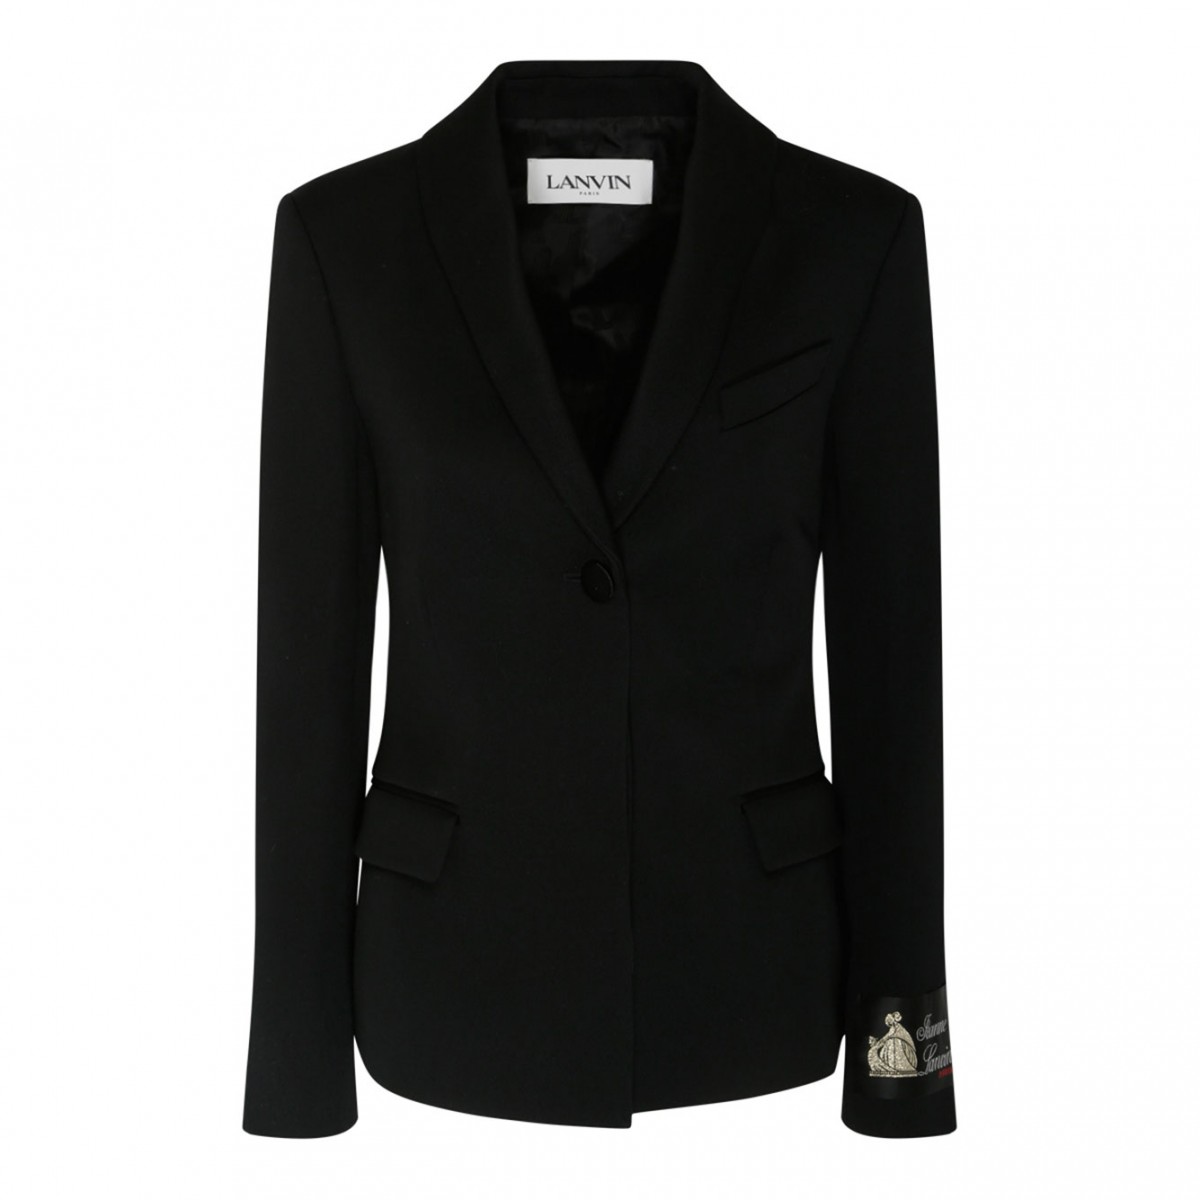 Lanvin Black Wool Single Breasted Tailored Jacket